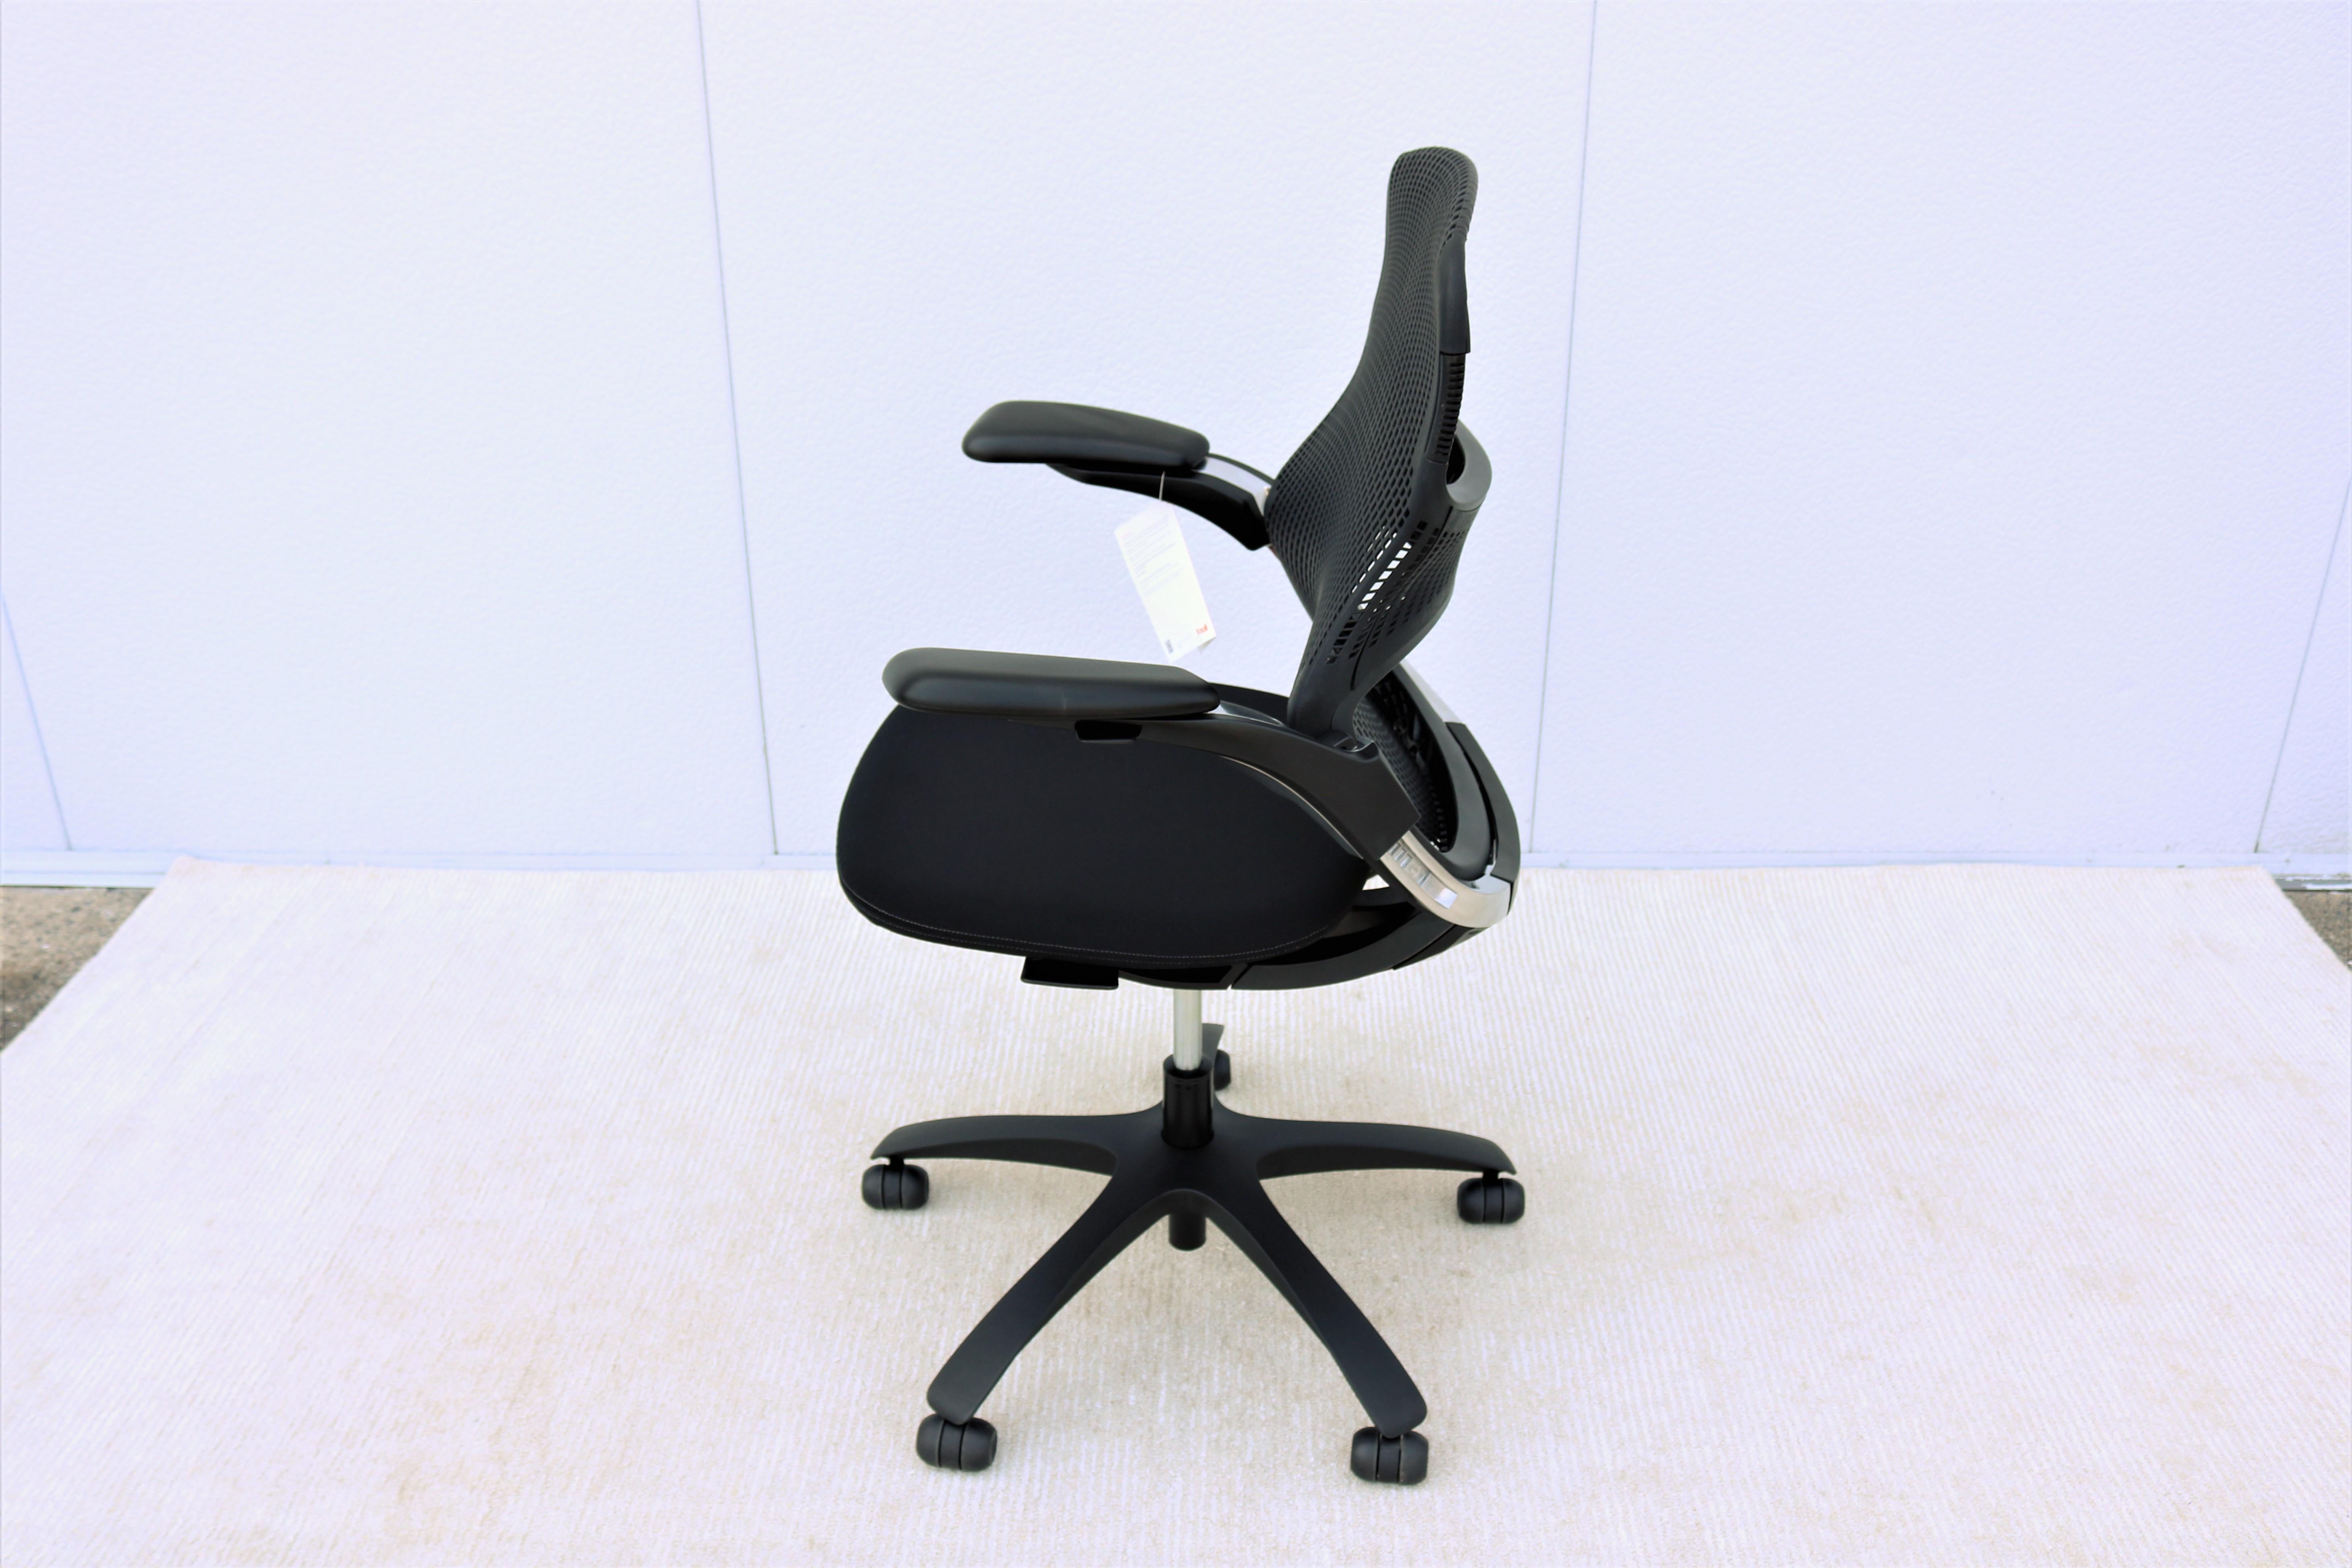 Steel Knoll Generation Black Ergonomic Office Desk Chair Fully Adjustable, Brand New For Sale